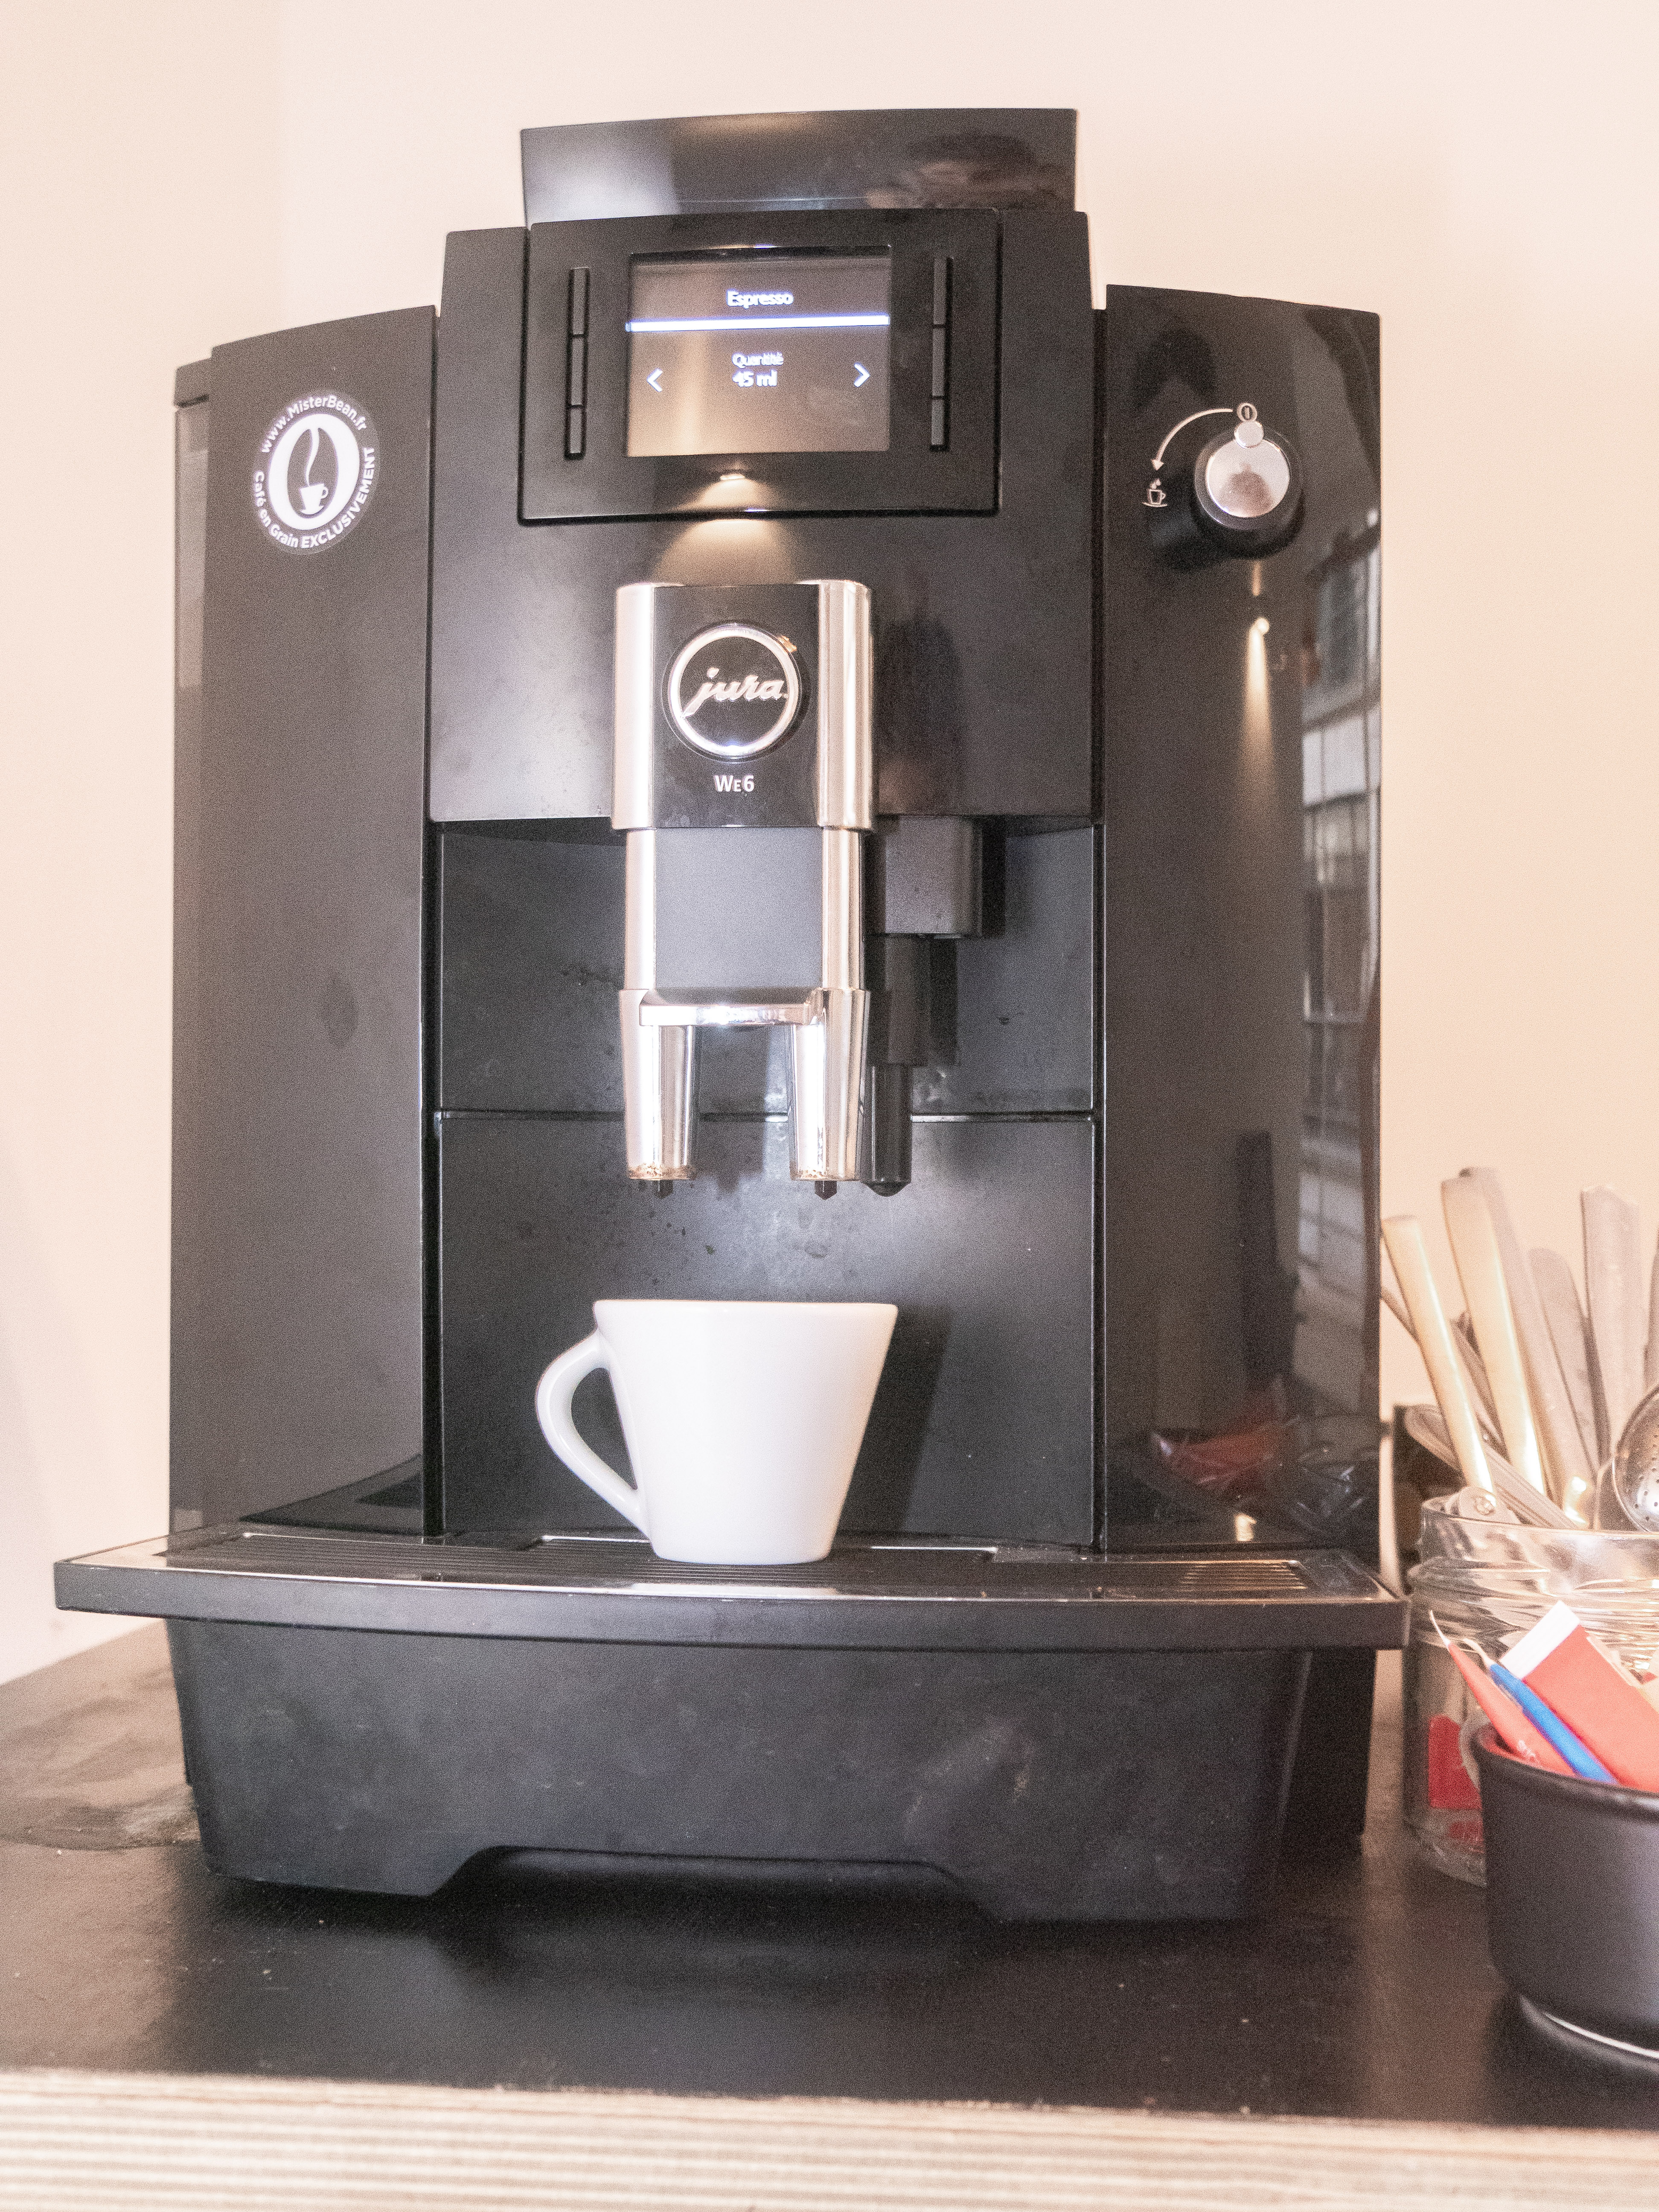 Jura machine a cafe WE6